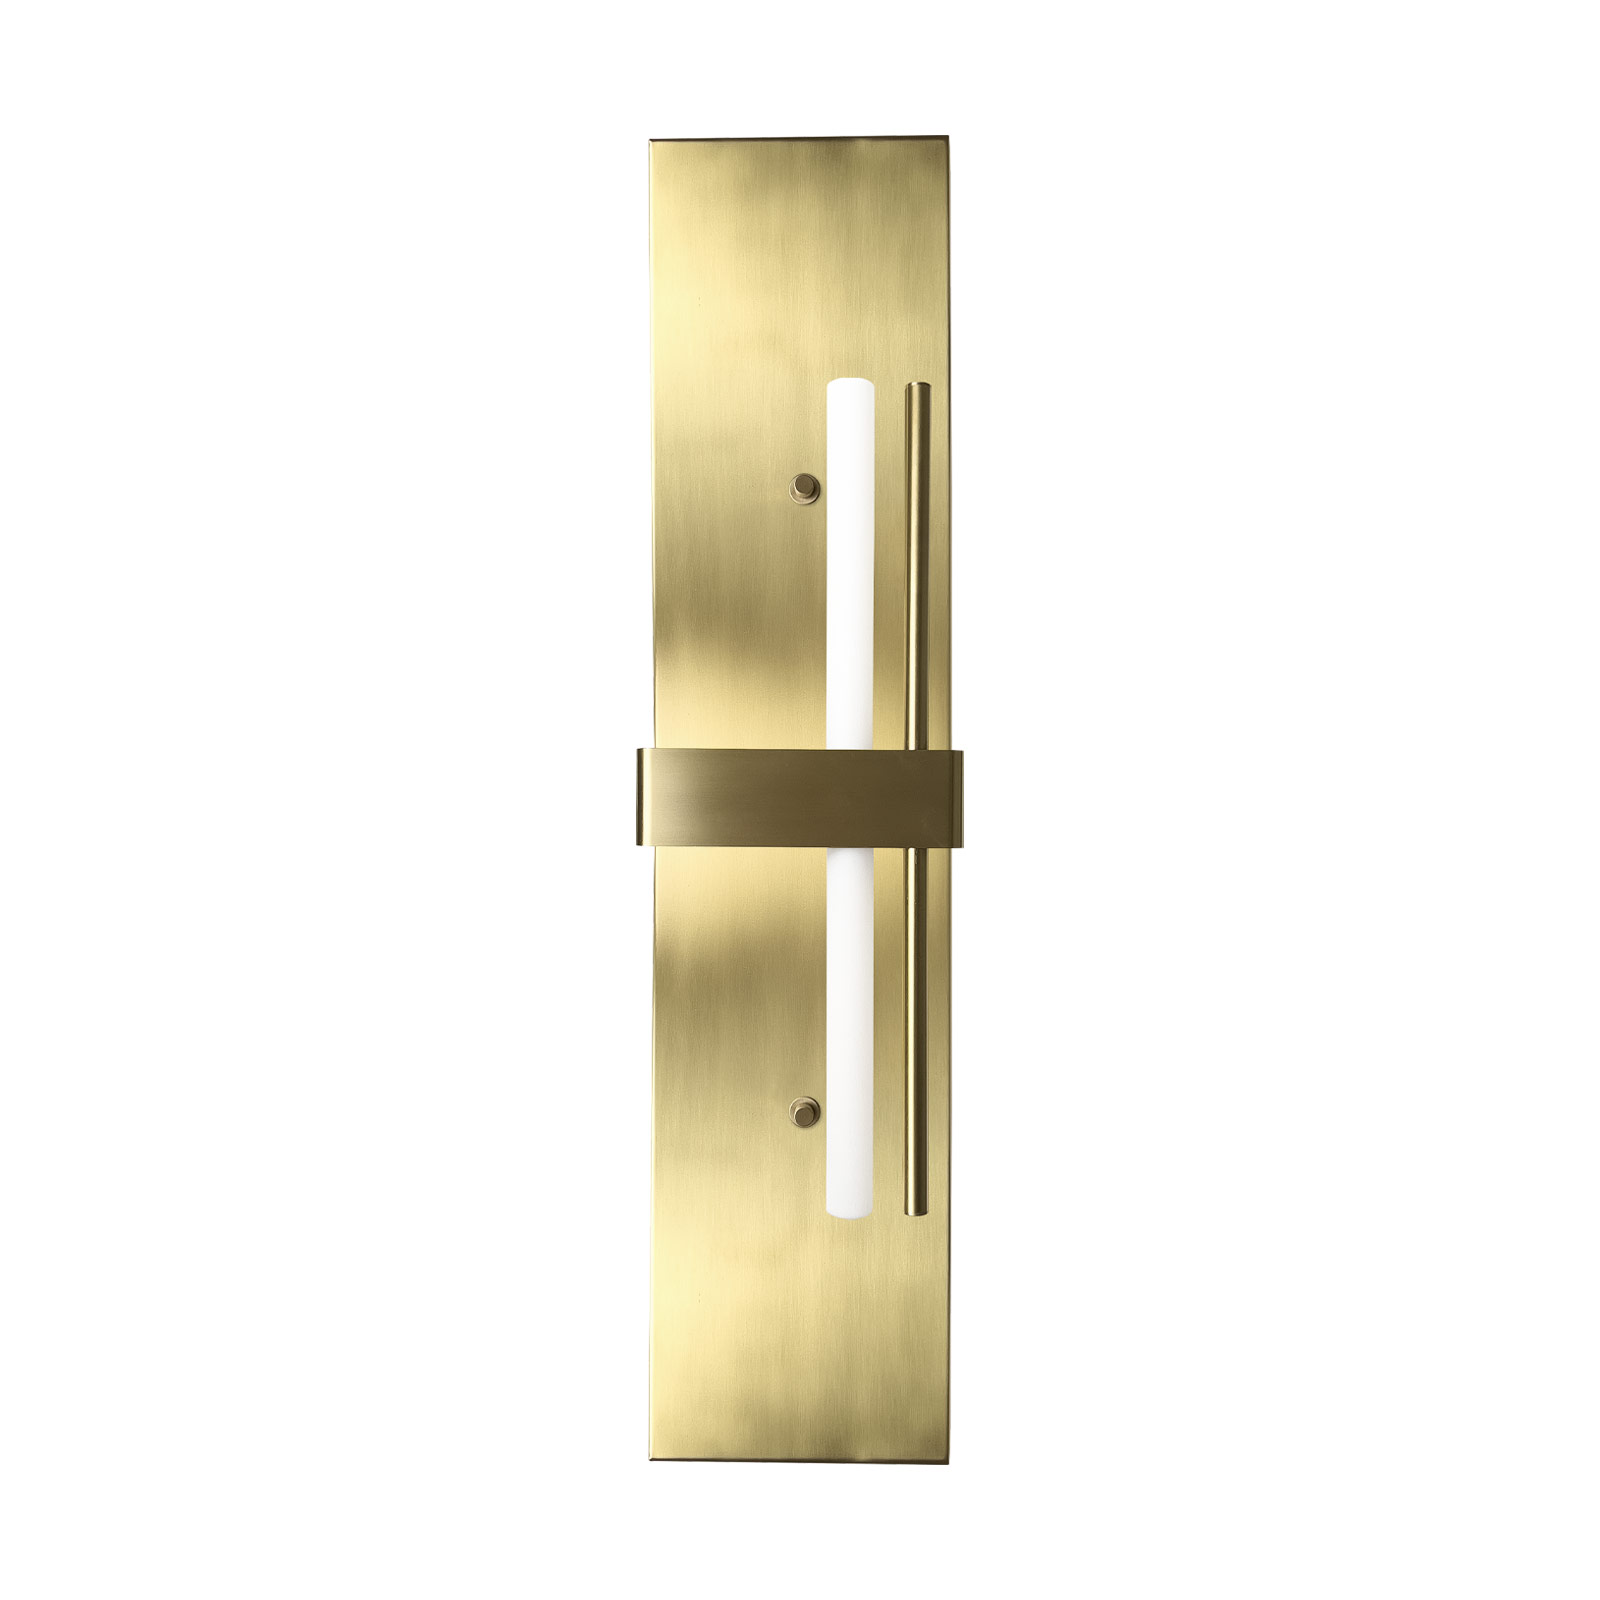 Wandlampe Messing H: 80 cm groß massiv in Bronze hell für S14d